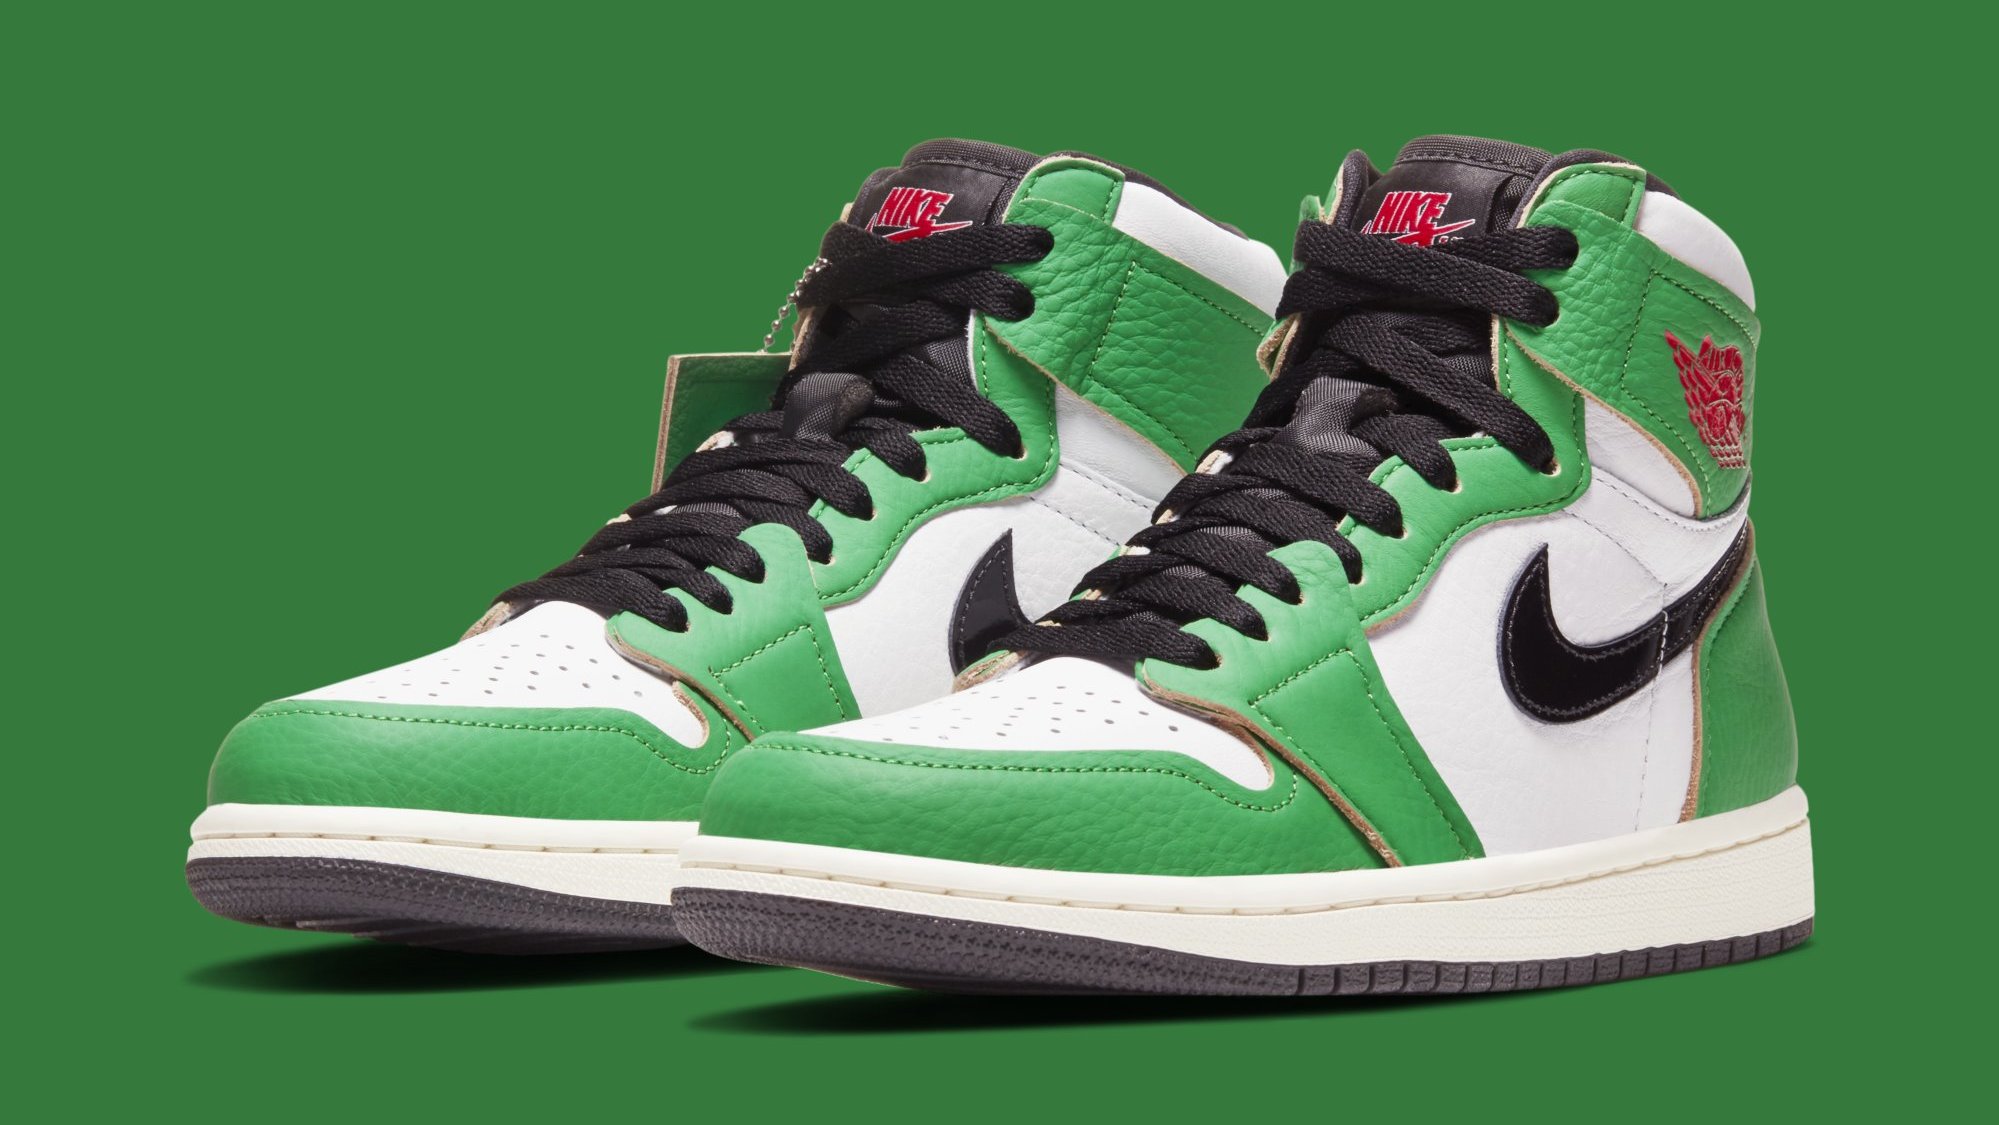 Best Look Yet at the 'Lucky Green' Air Jordan 1 High | Complex